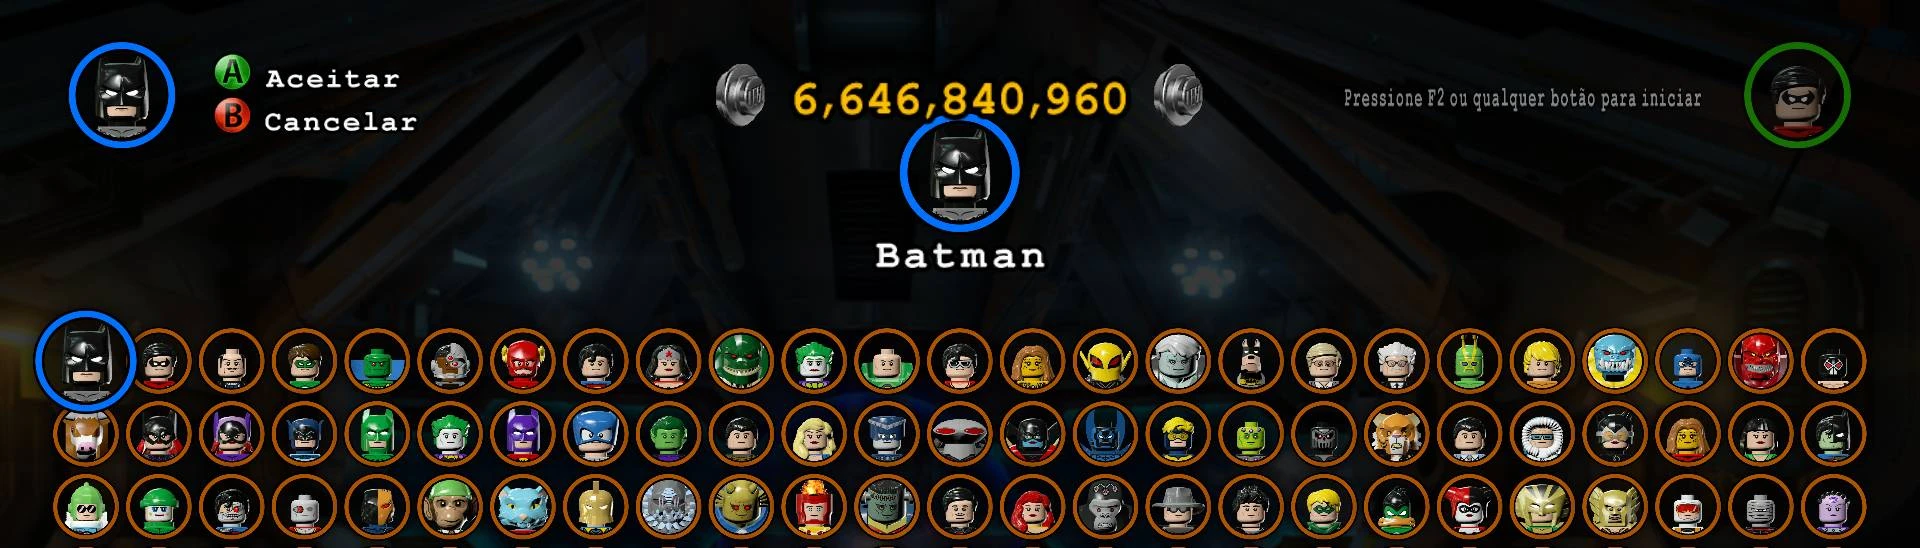 lego batman beyond gotham all characters